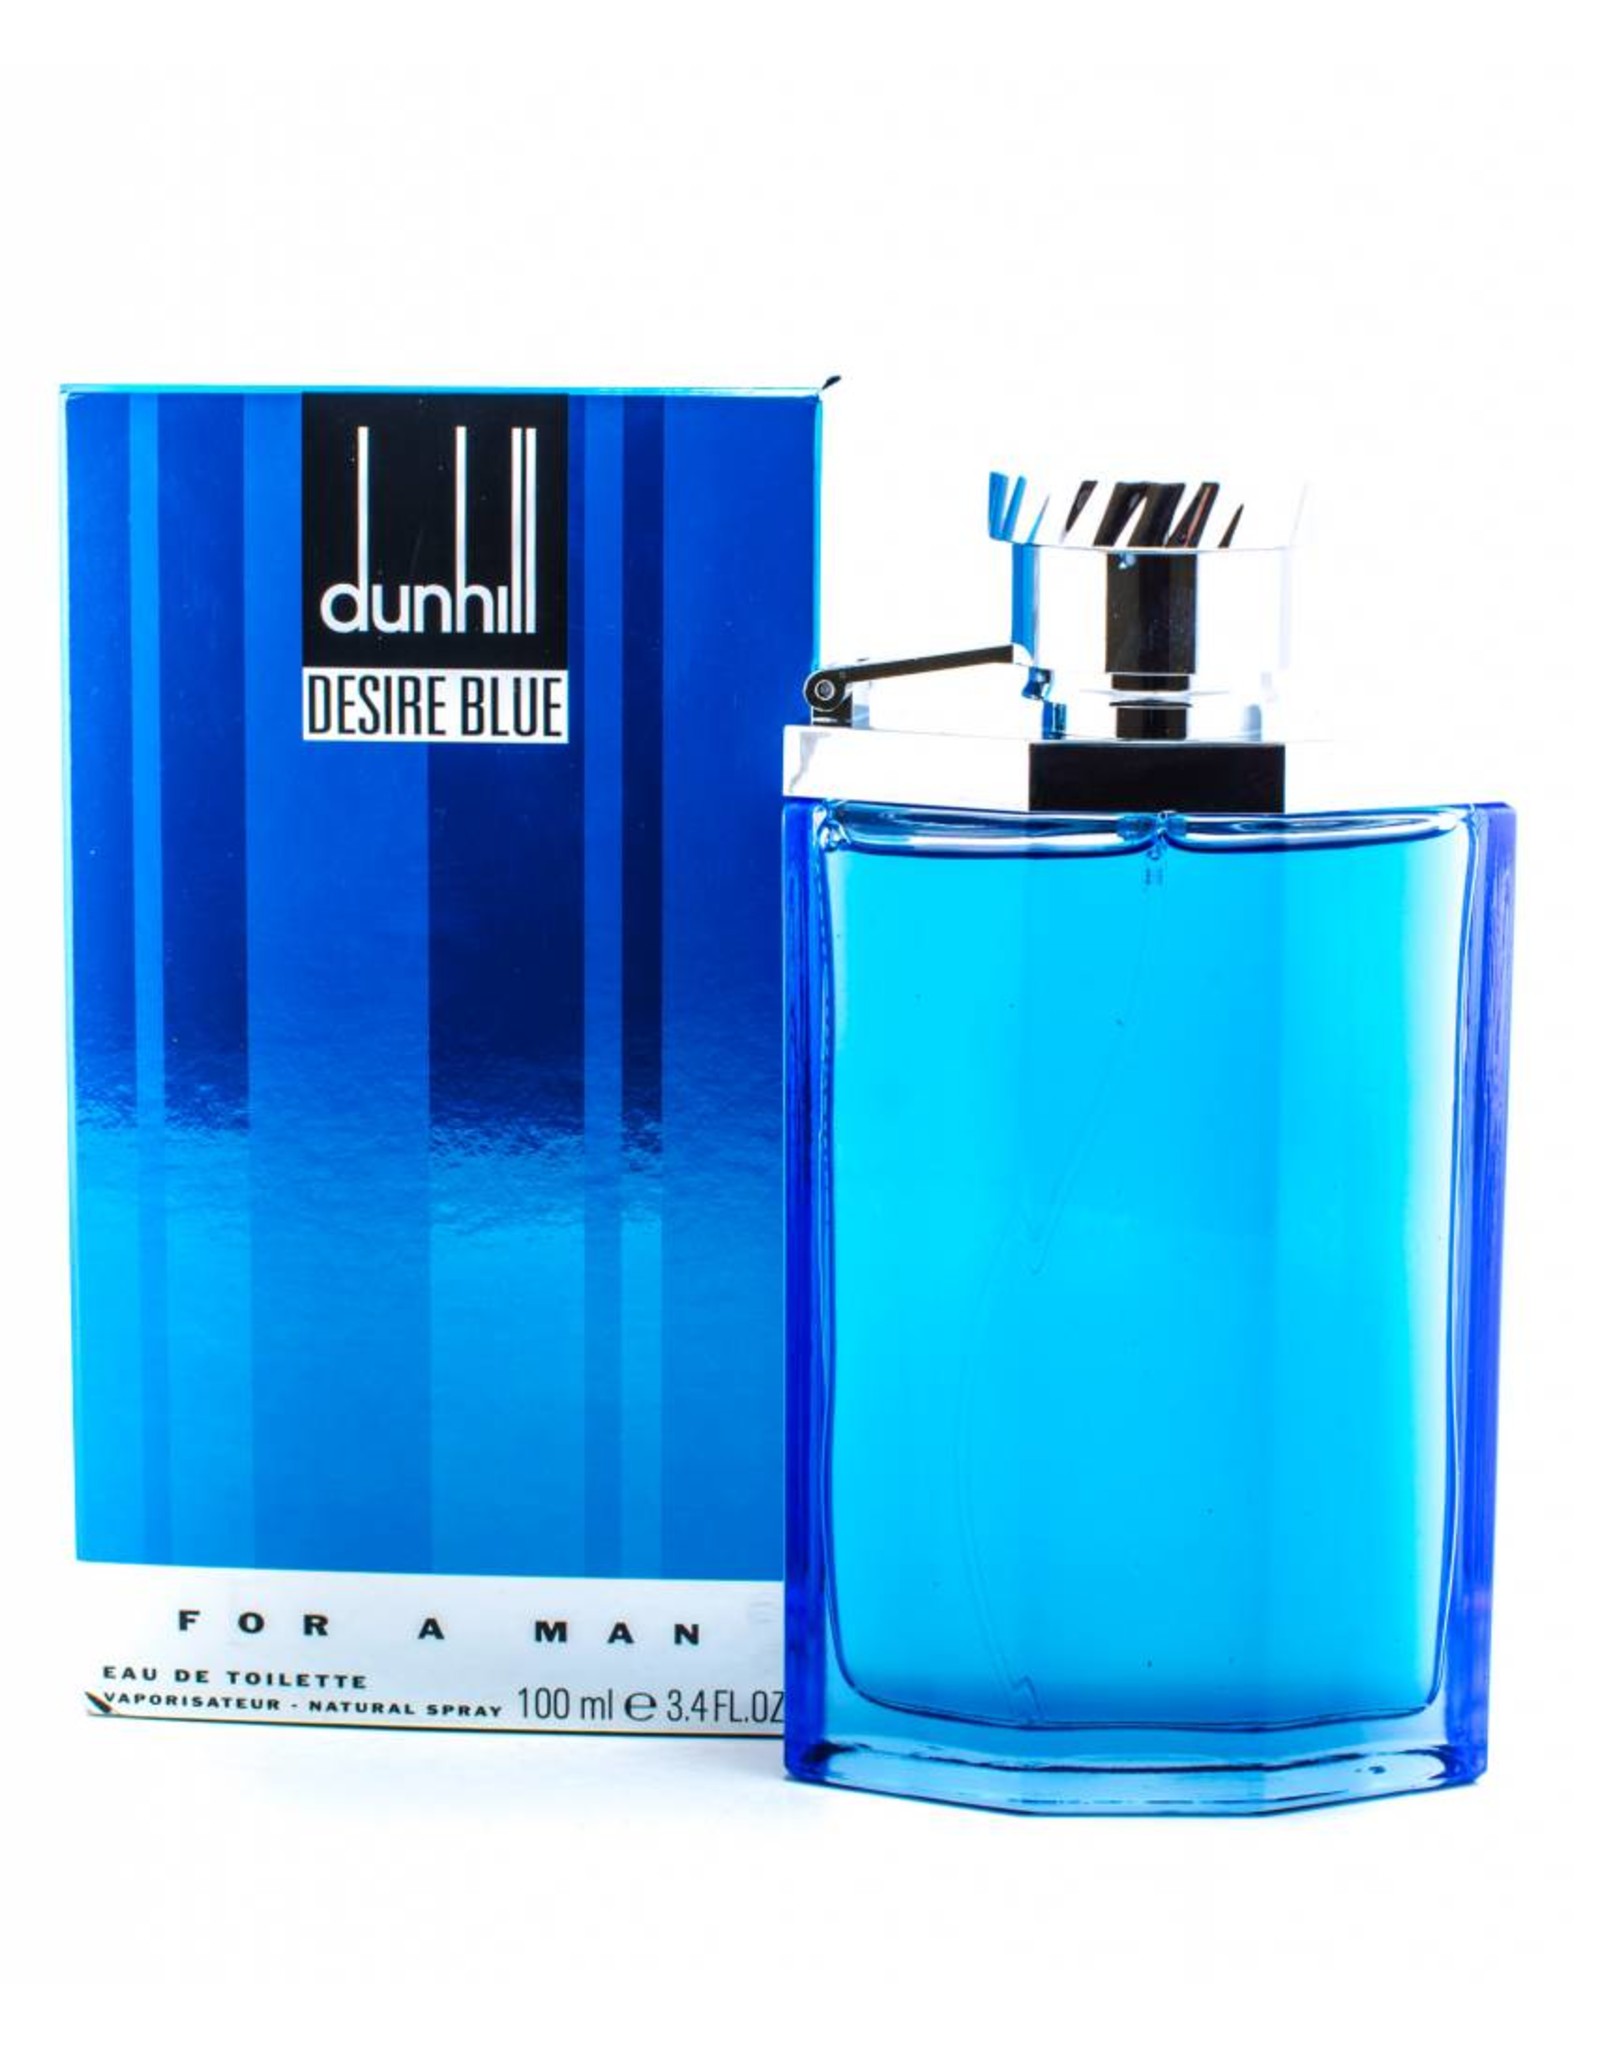 DUNHILL DESIRE BLUE - PARFUM DIRECT